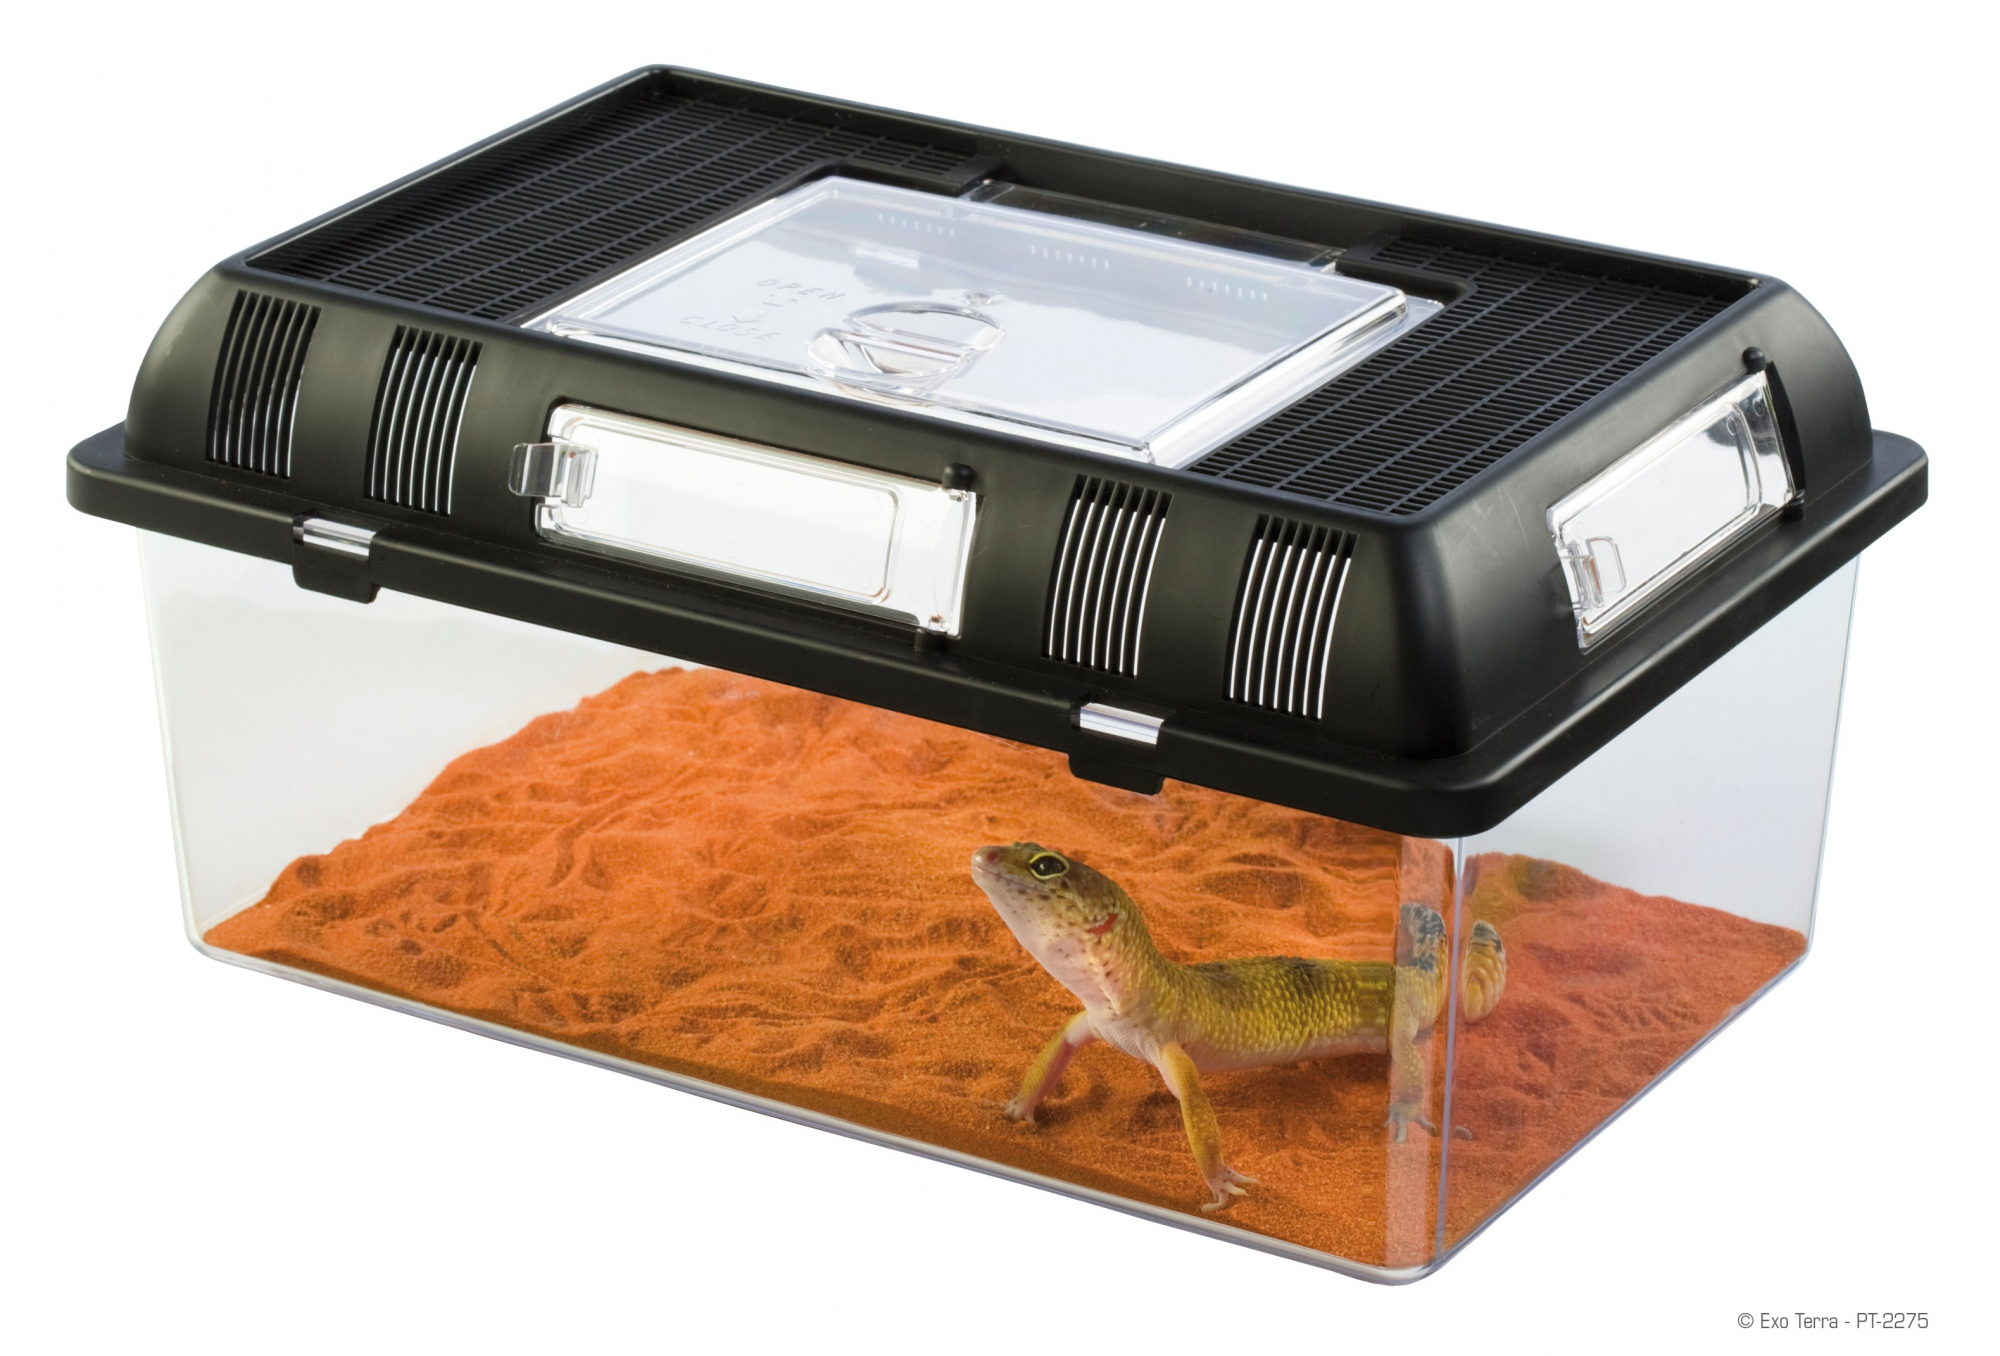 Caja de cría de reptiles Exo Terra Breeding Box - Varios tamaños disponibles